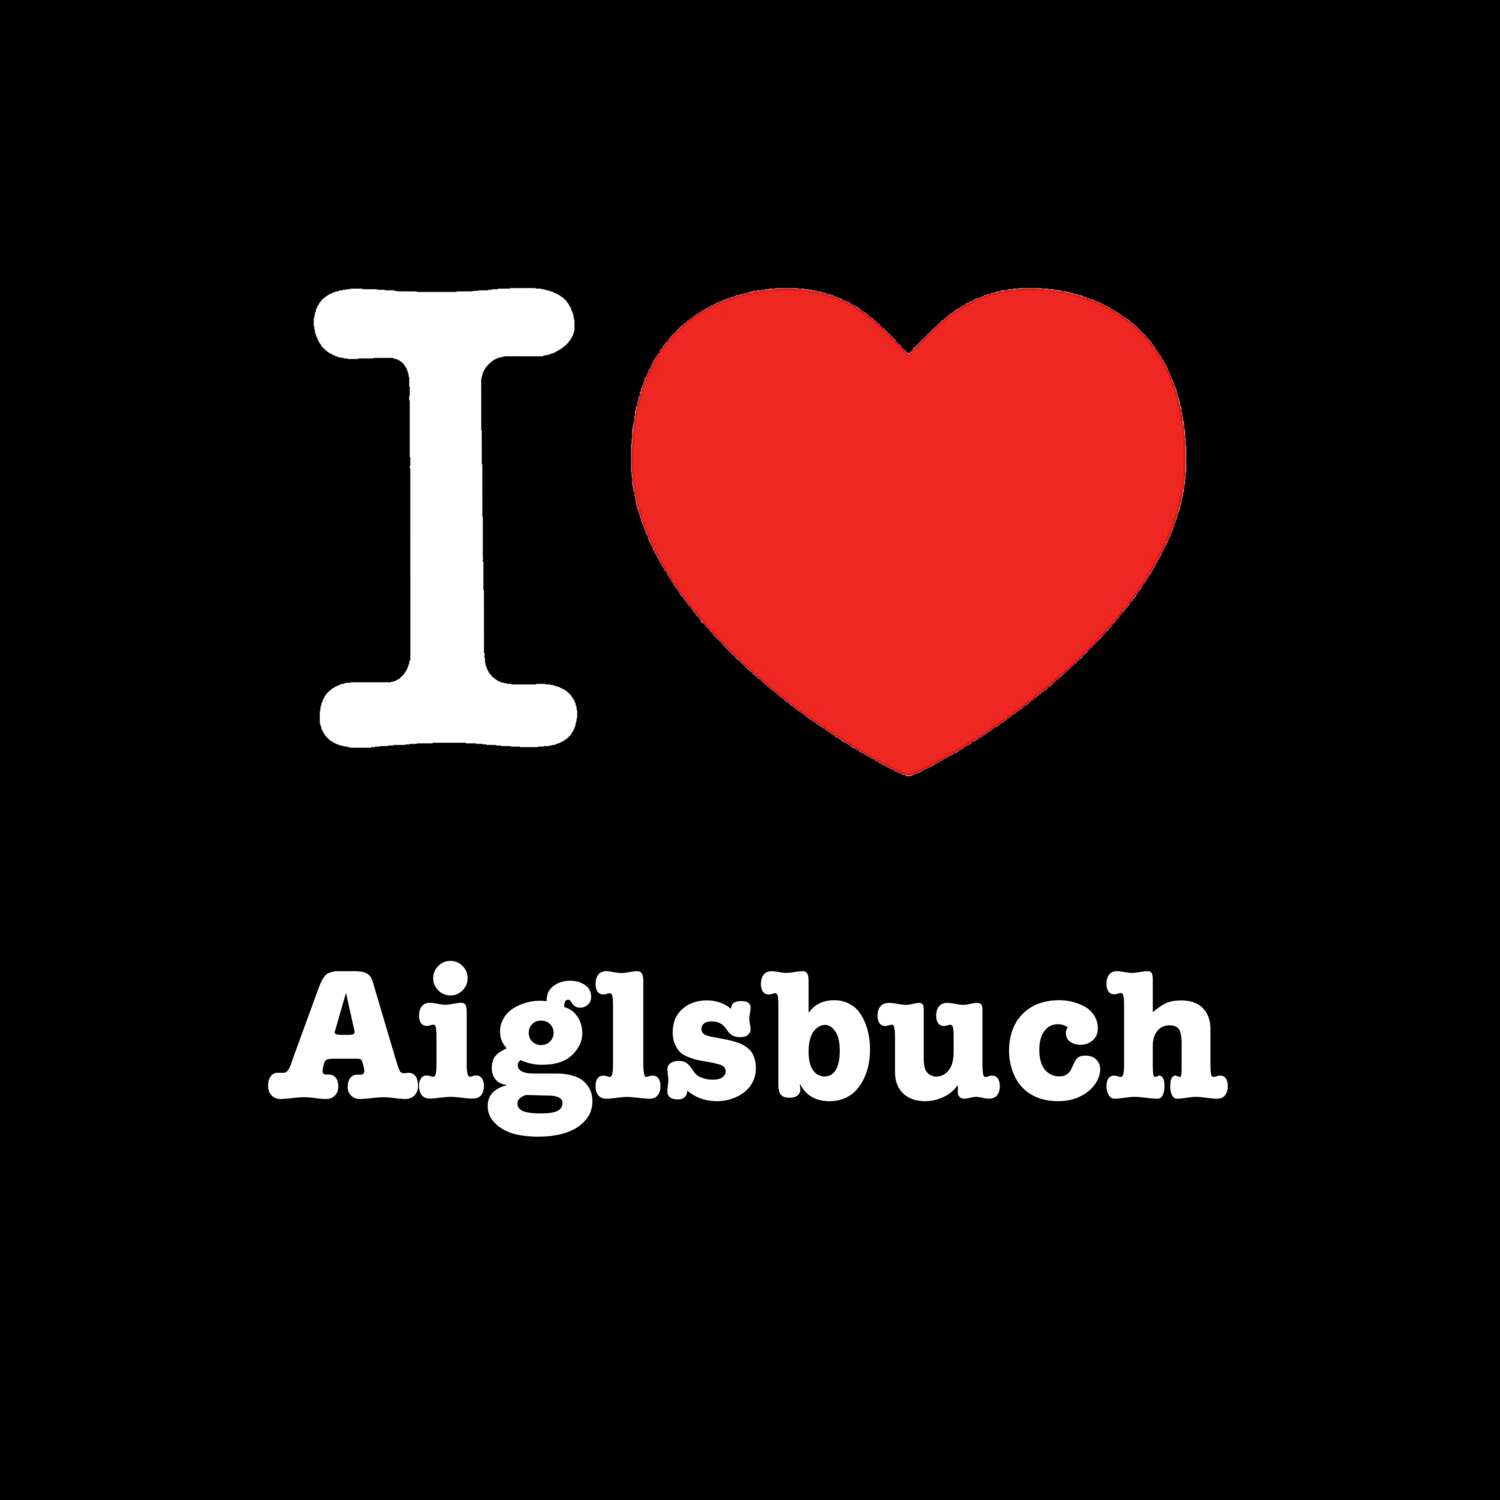 Aiglsbuch T-Shirt »I love«